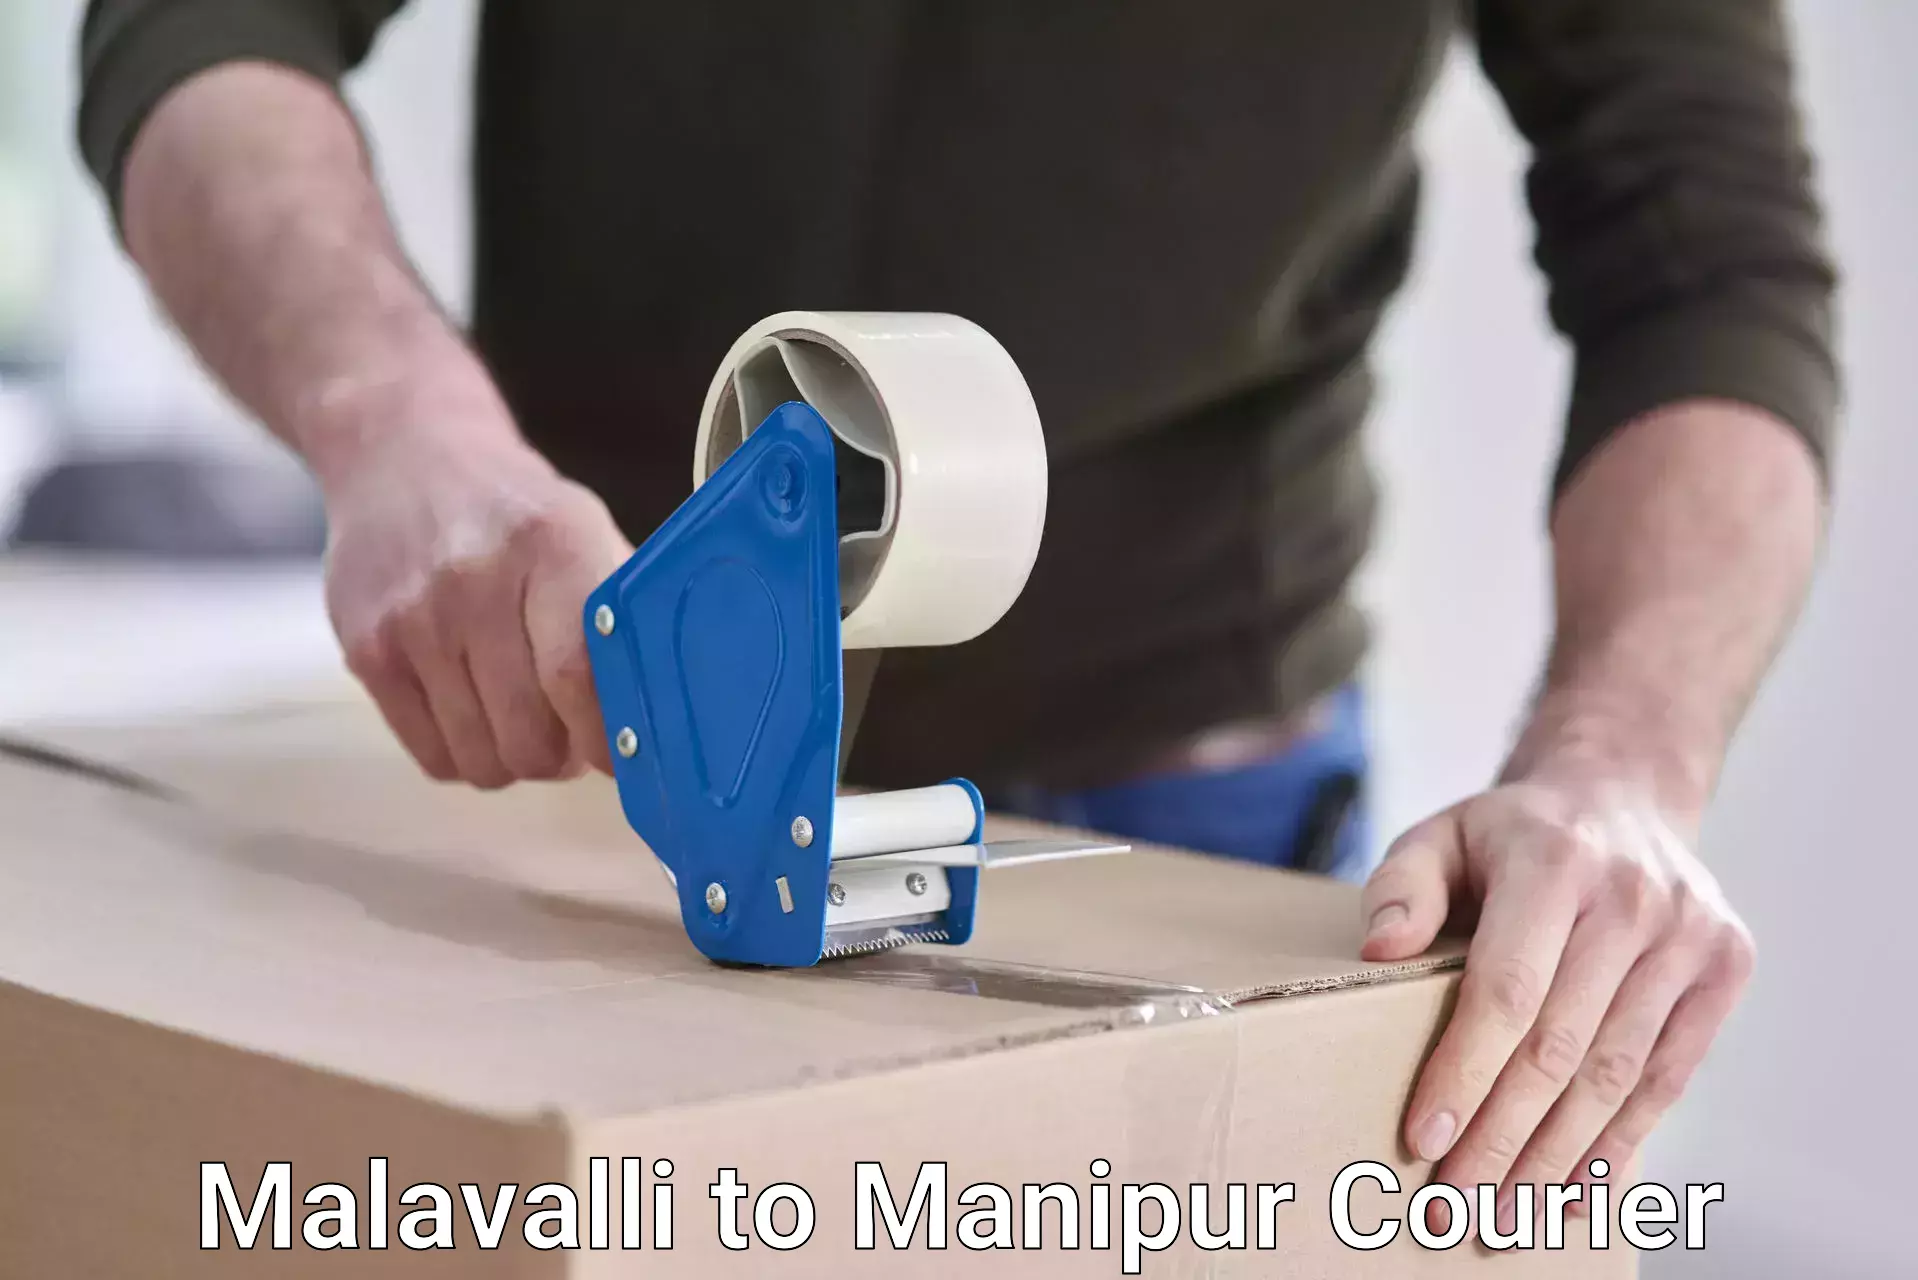 Modern courier technology Malavalli to Manipur